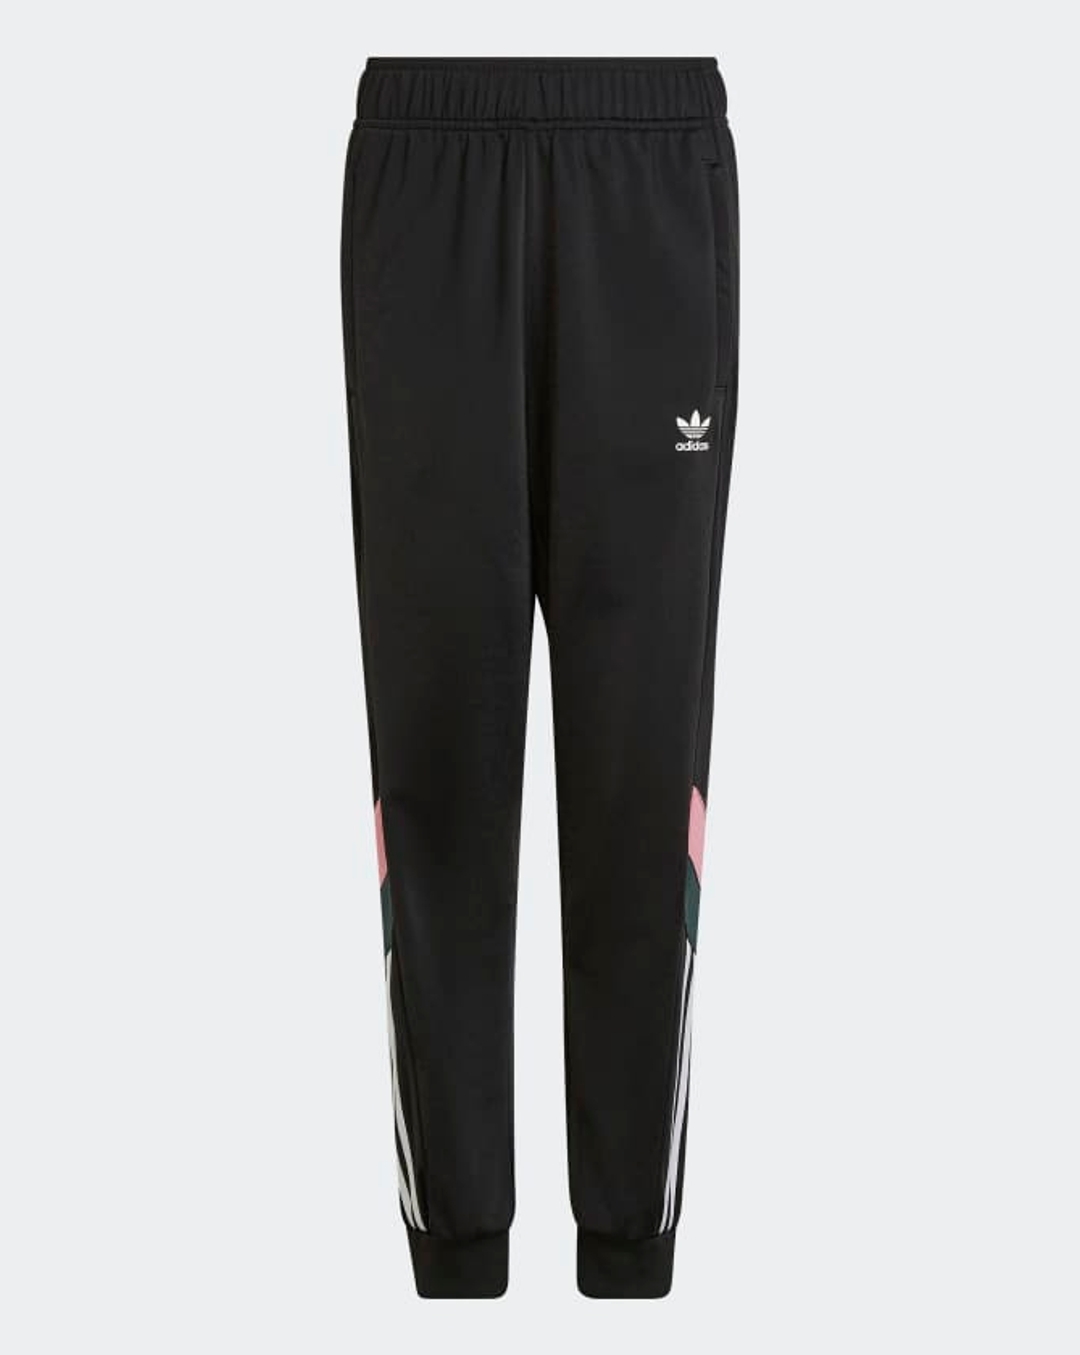 Pants adidas Originals Trefoil Pants Black for Junior  DV2872  adidas  trend collection furry coat outlet list  ArvindShops